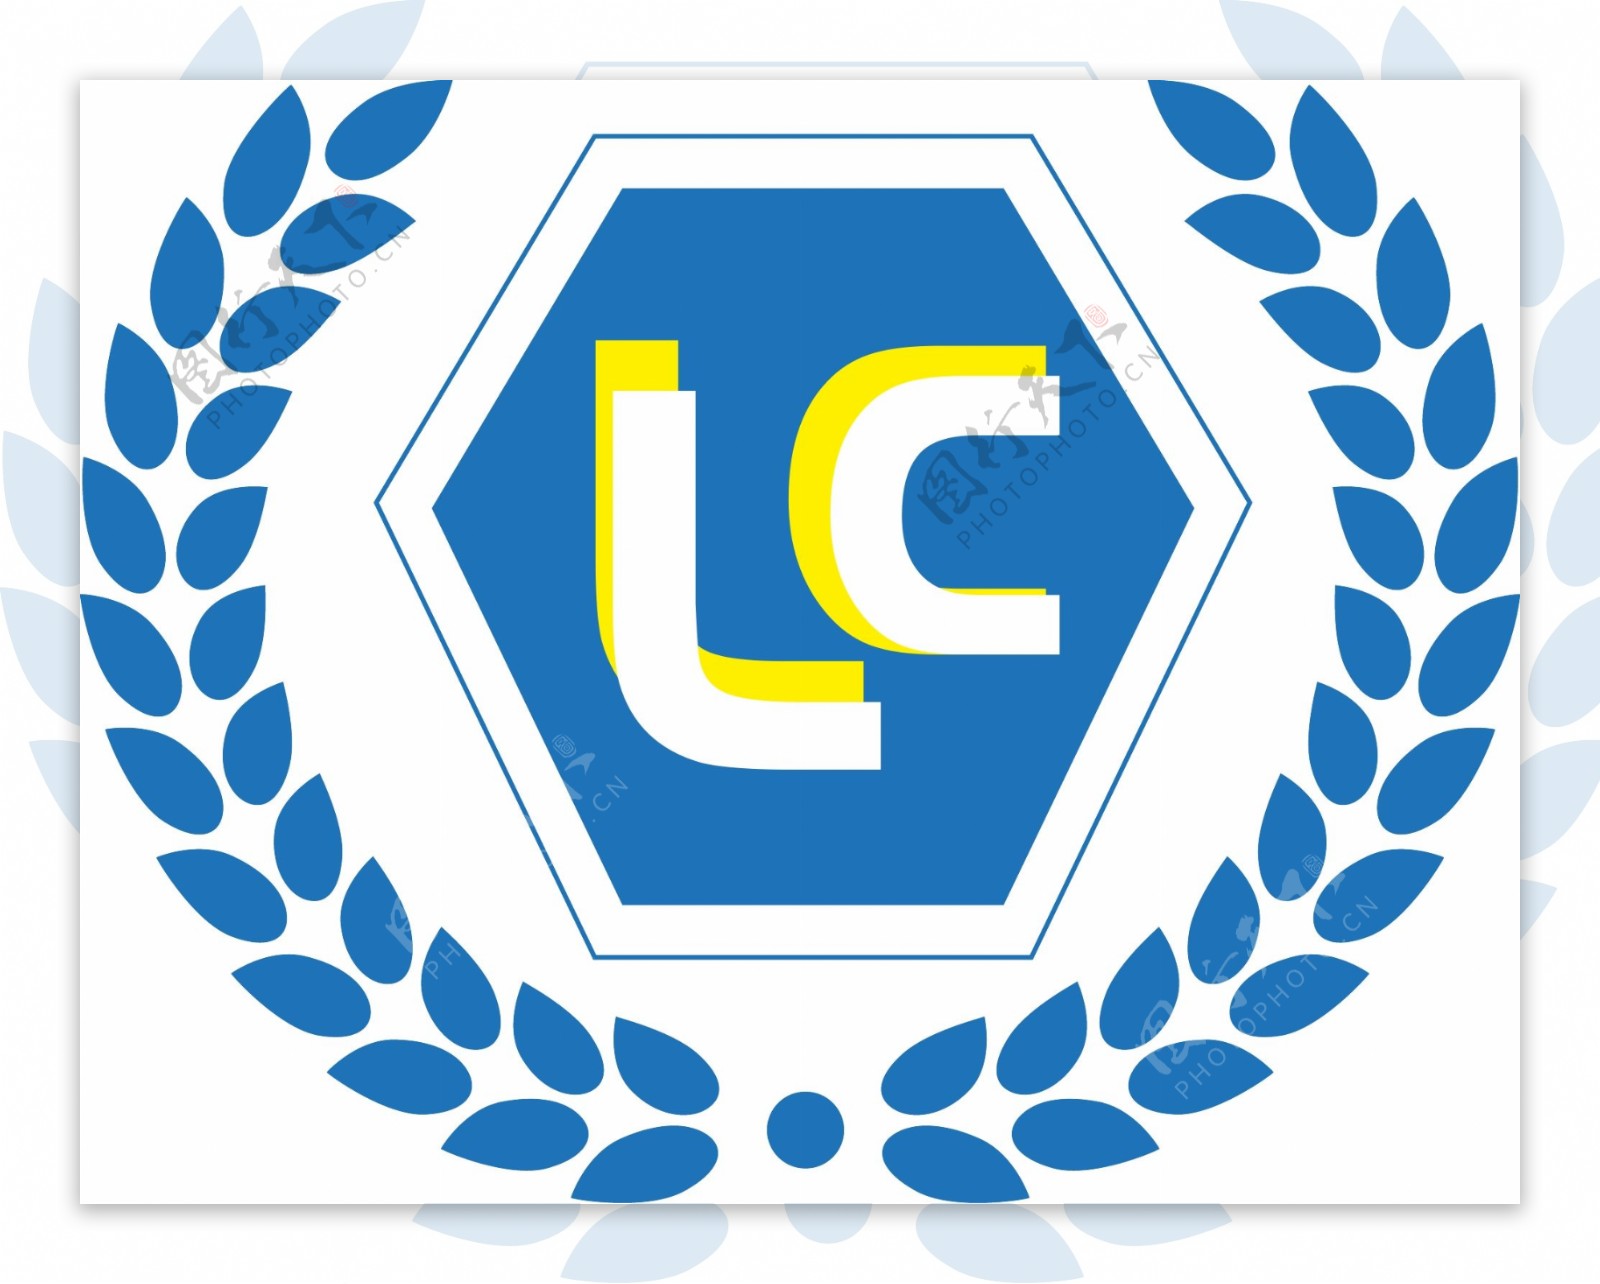 原创lc字母企业logo